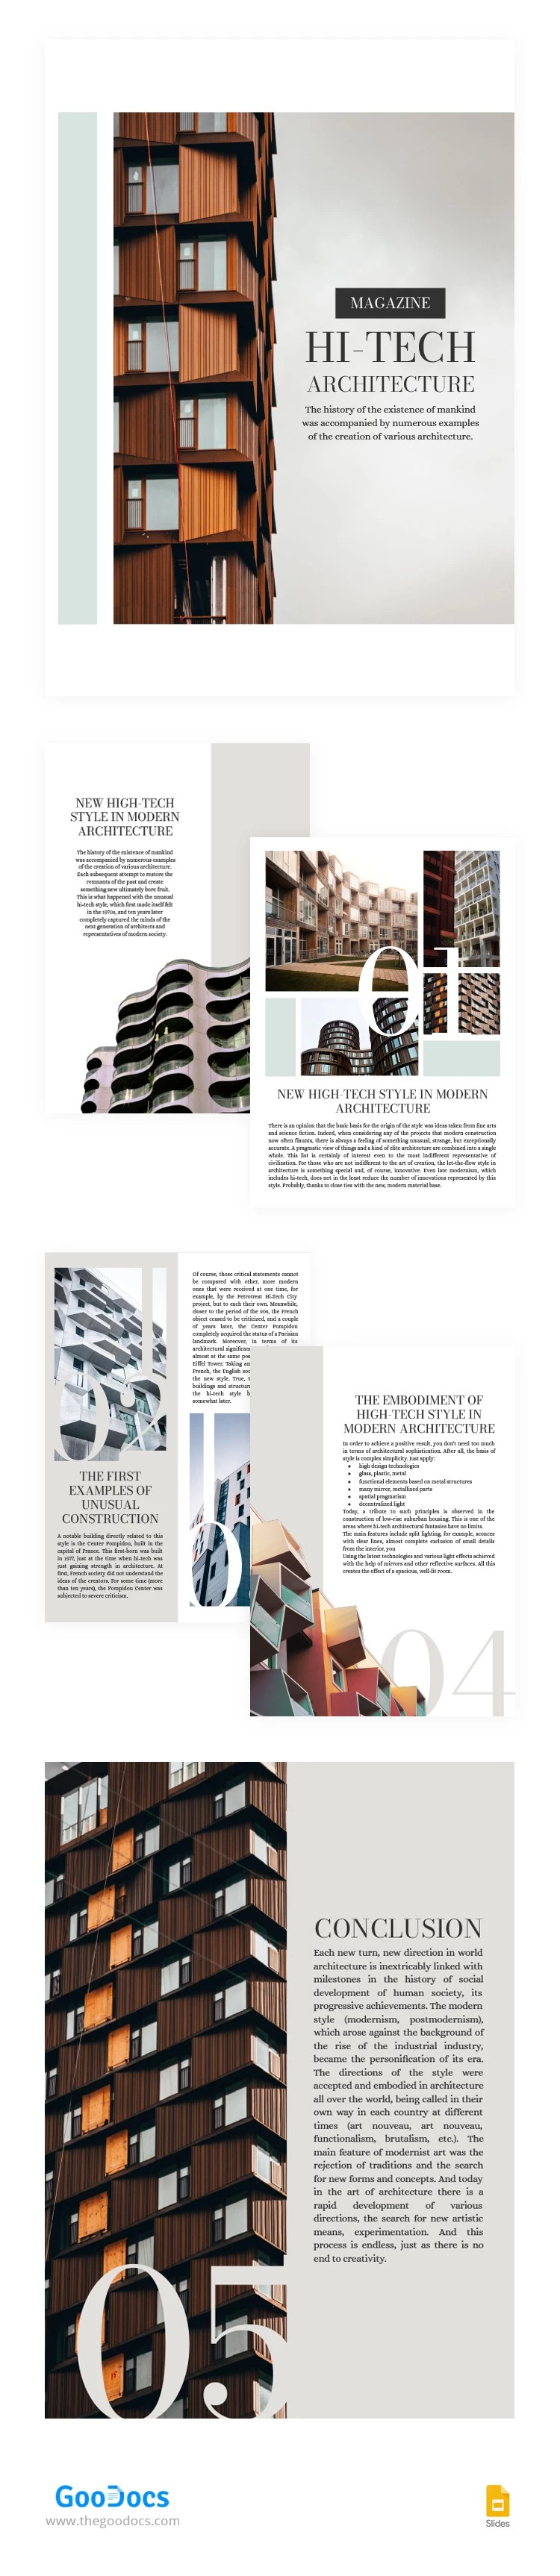 Revista de Arquitetura de Alta Tecnologia - free Google Docs Template - 10064618